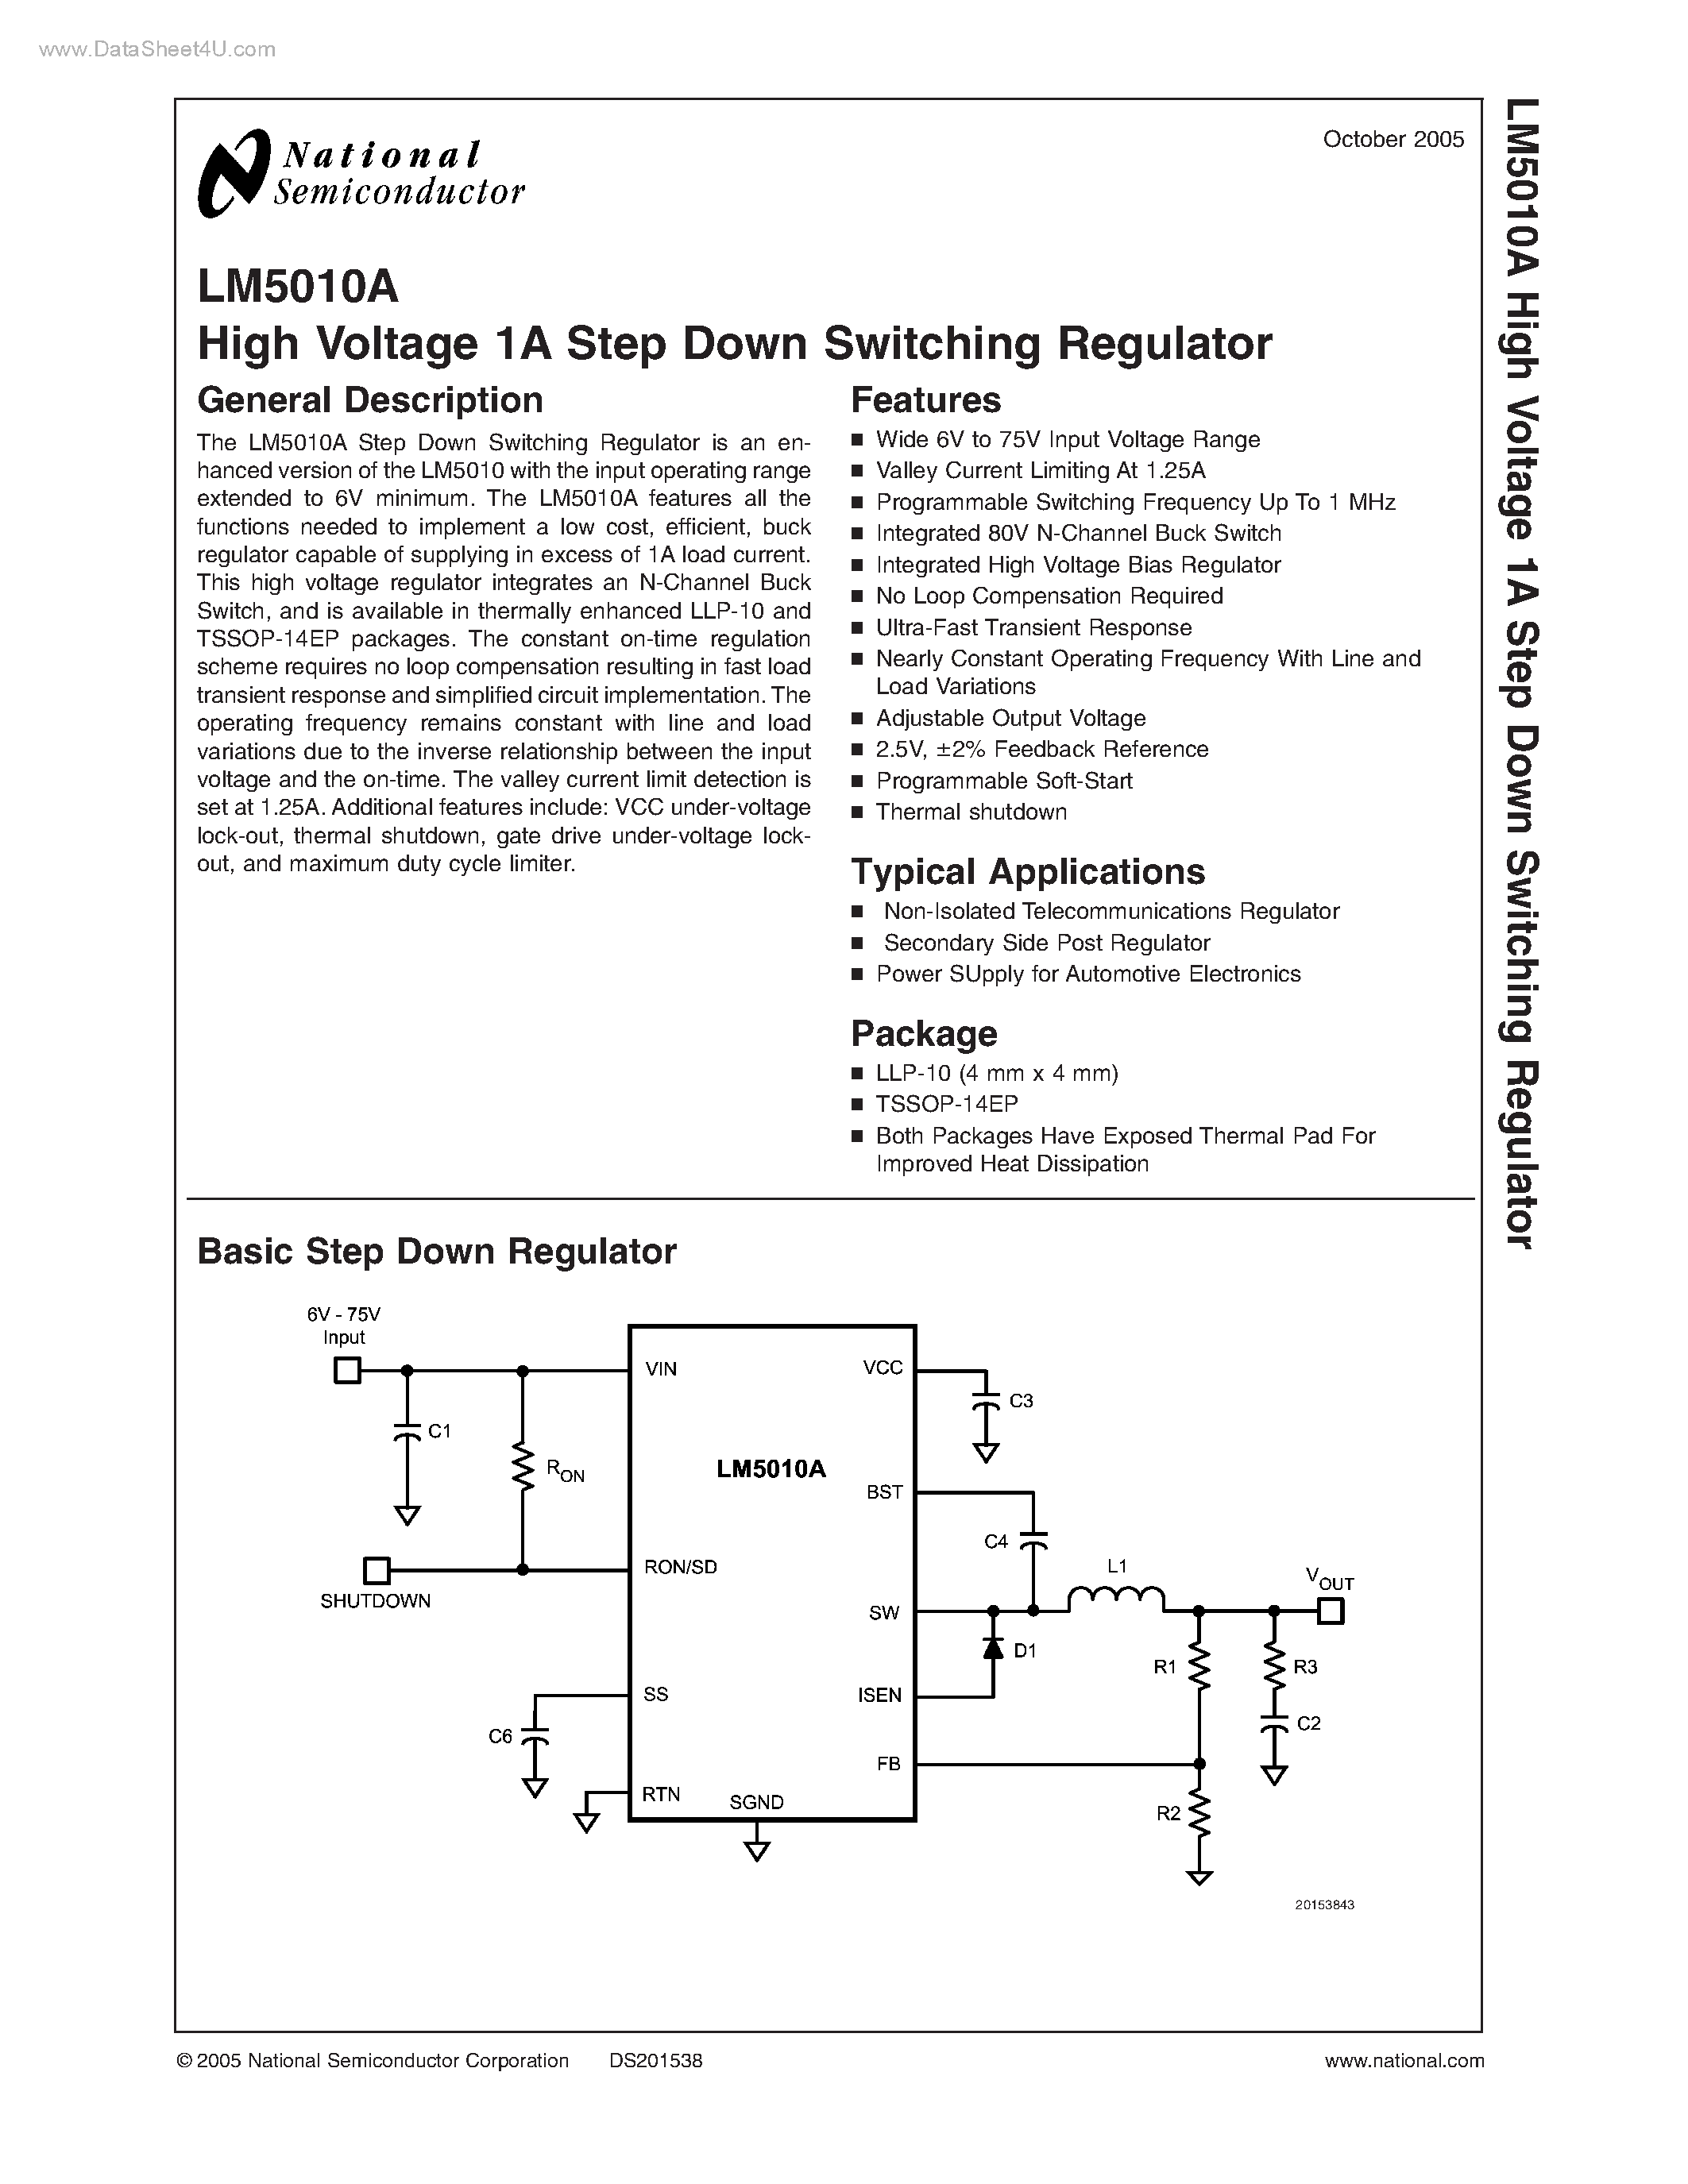 Даташит LM5010A - High Voltage 1A Step Down Switching Regulator страница 1